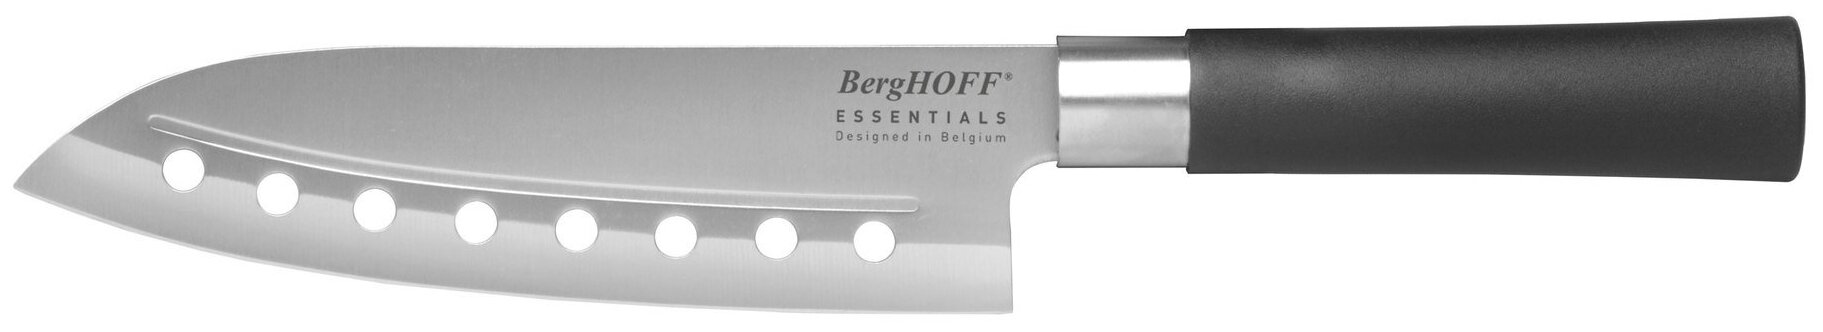 Нож сантоку с отверстиями в лезвии 18см BergHOFF Essentials